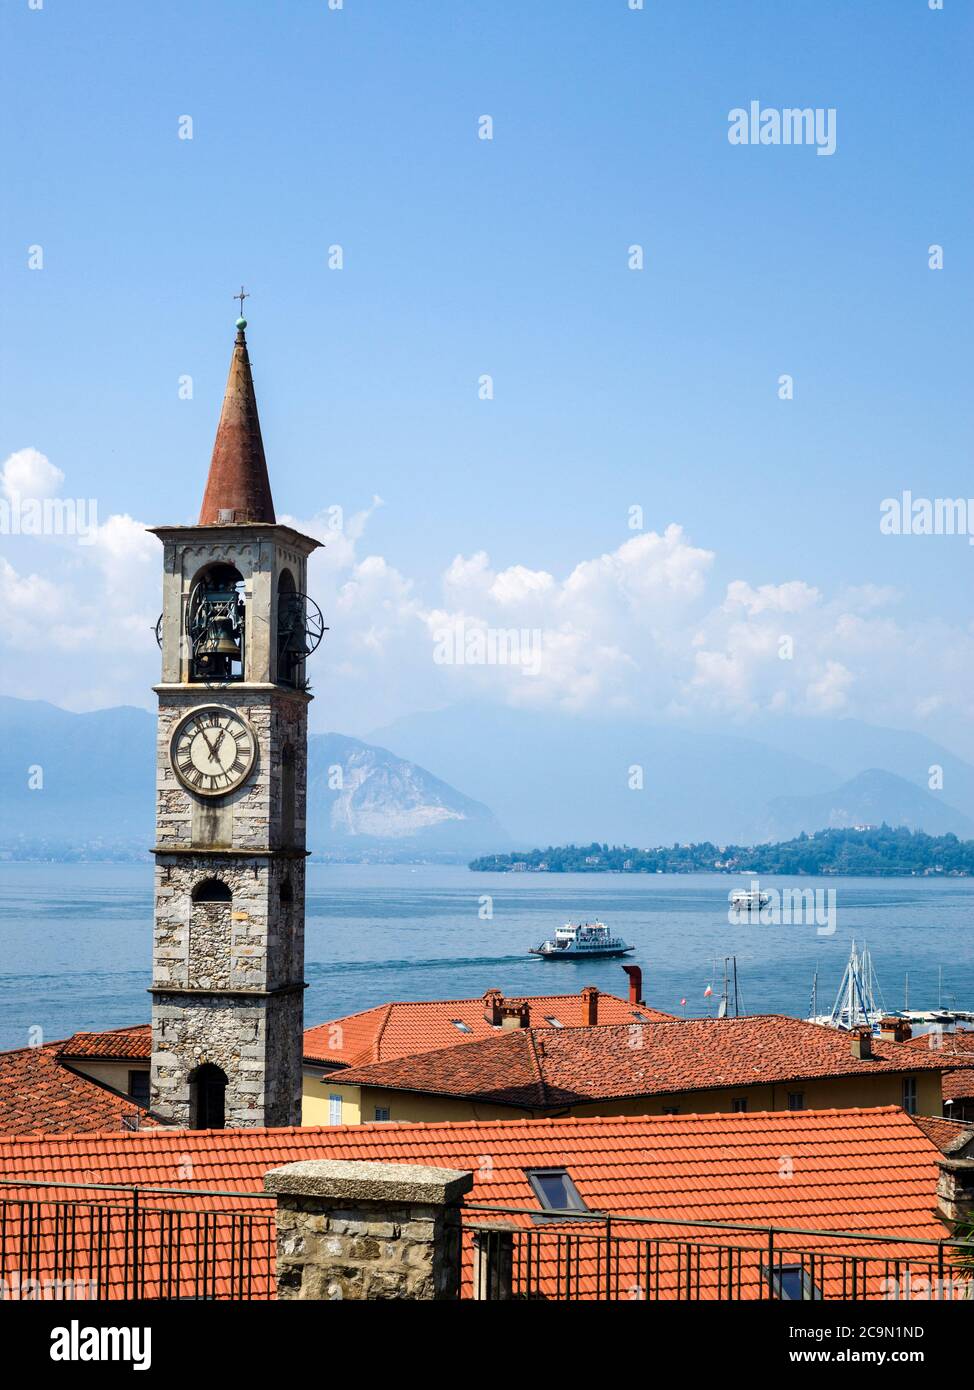 The city of Laveno with lake and Chiesa Vecchia Stock Photo